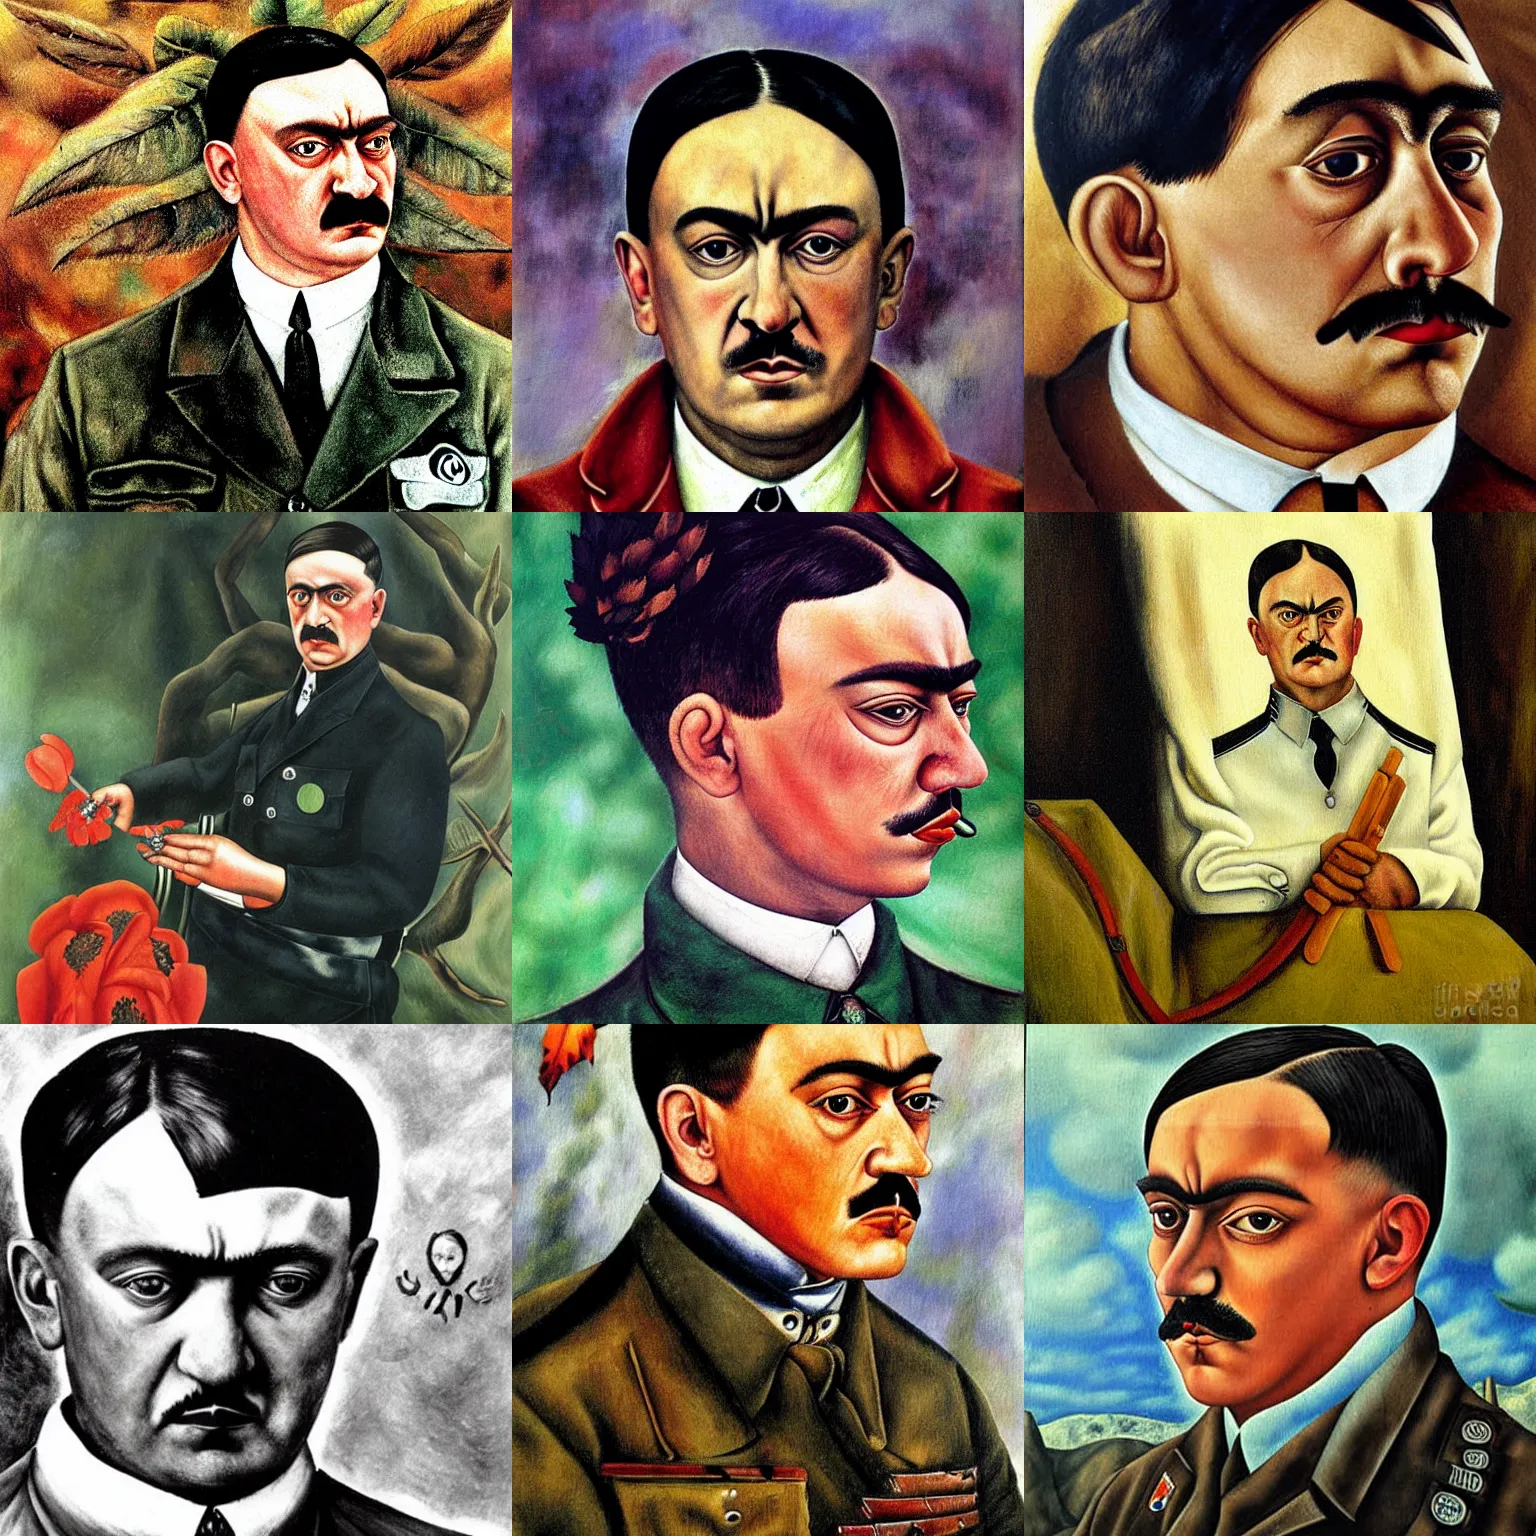 Prompt: adolf Hitler painting by frida kahlo